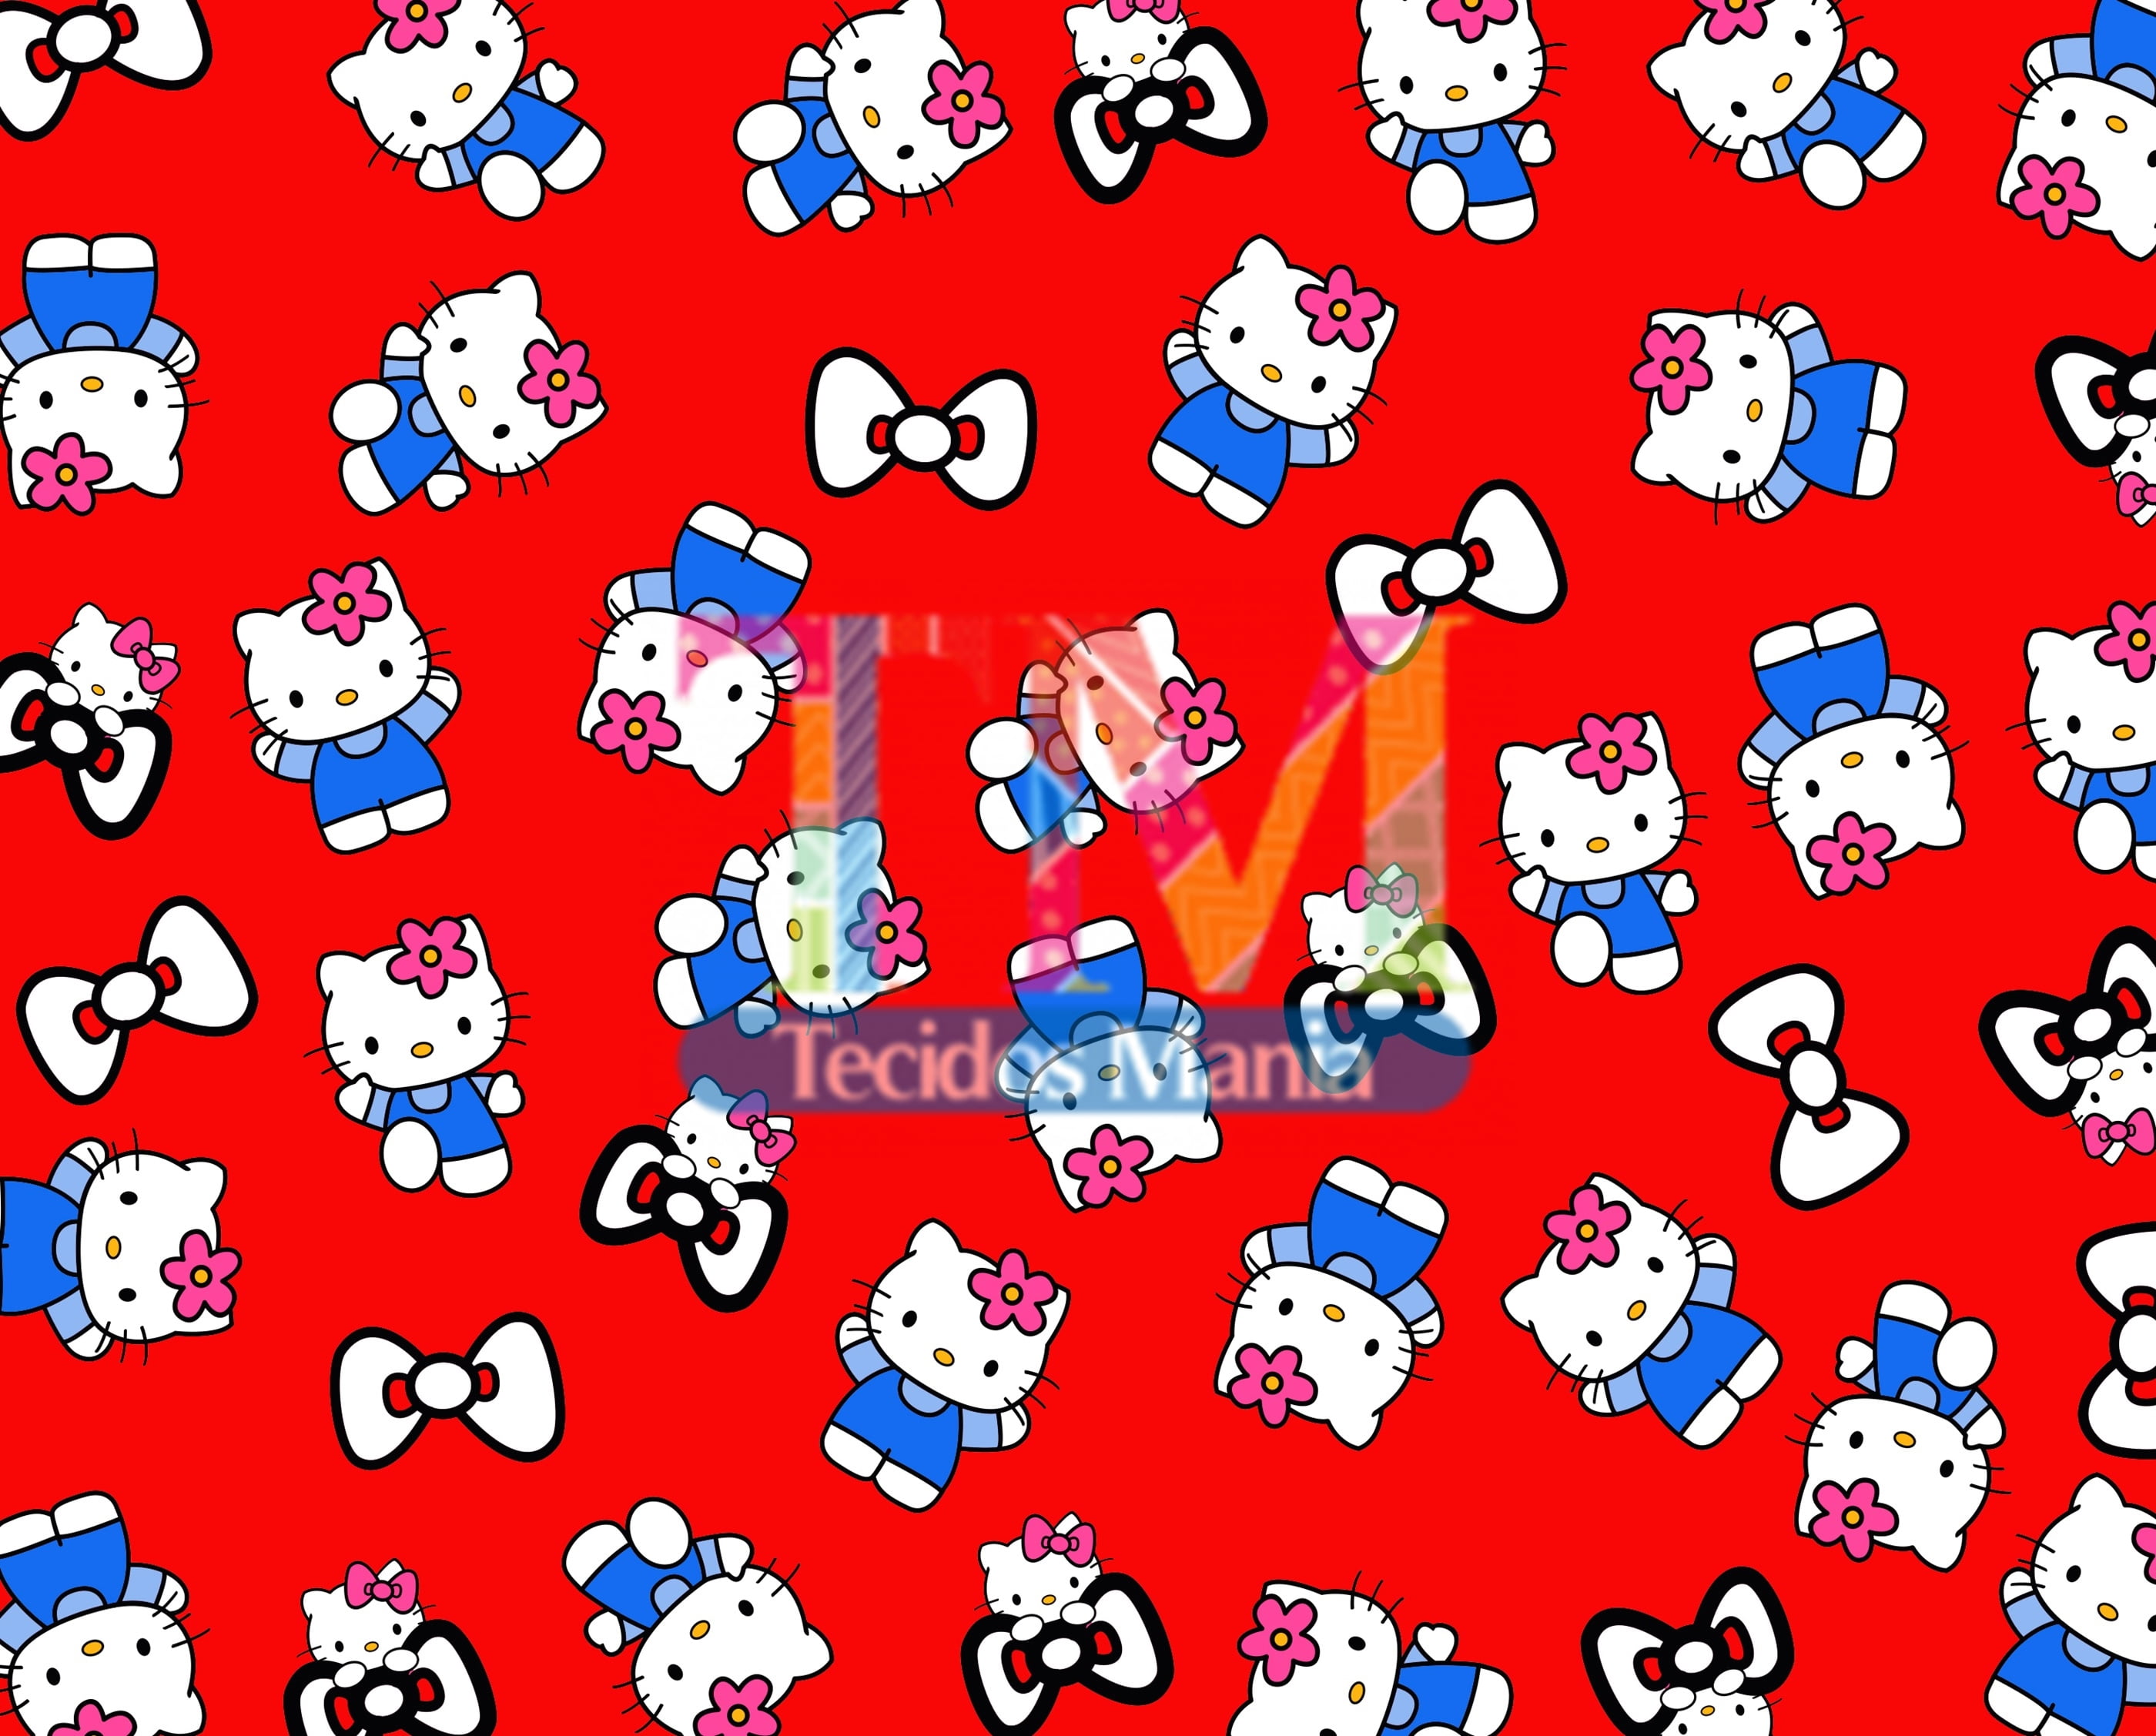 Tecido tricoline, microfibra ou gabardine estampado - Hello Kitty - Fundo vermelho